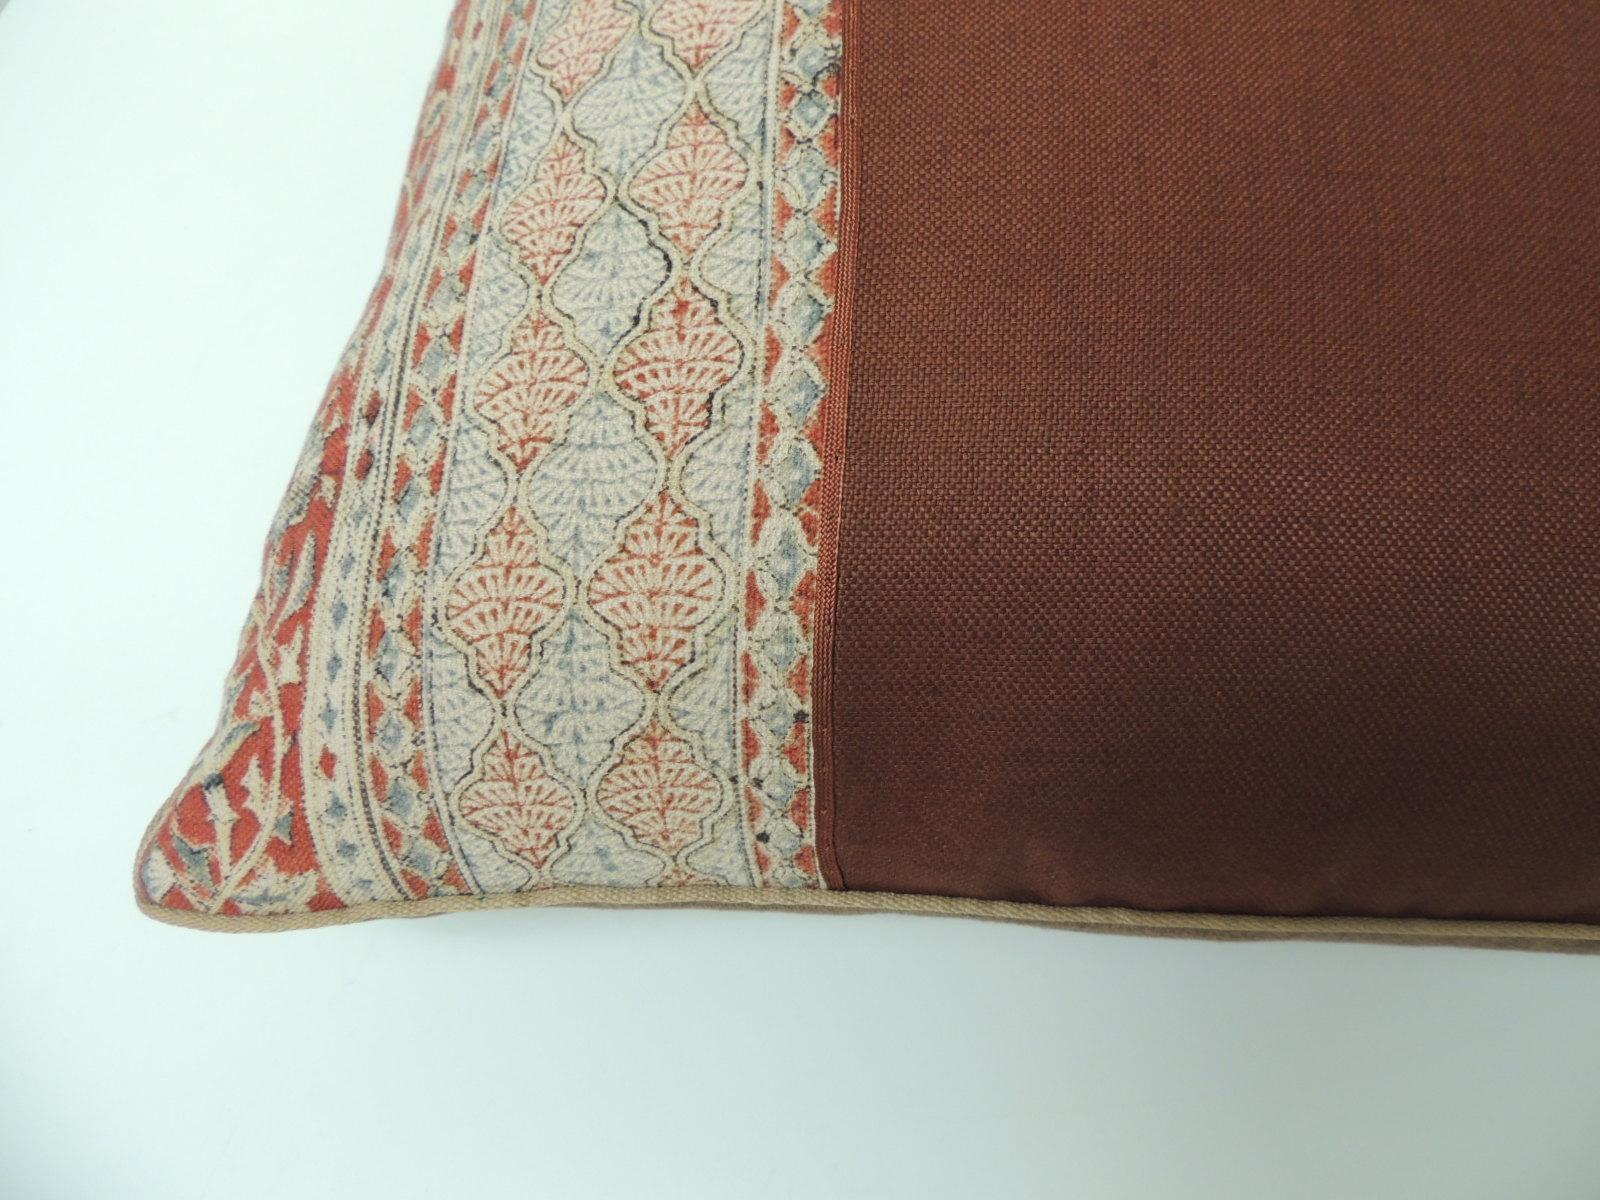 Hand-Crafted Vintage Kalamkari Indian Square Decorative Pillow